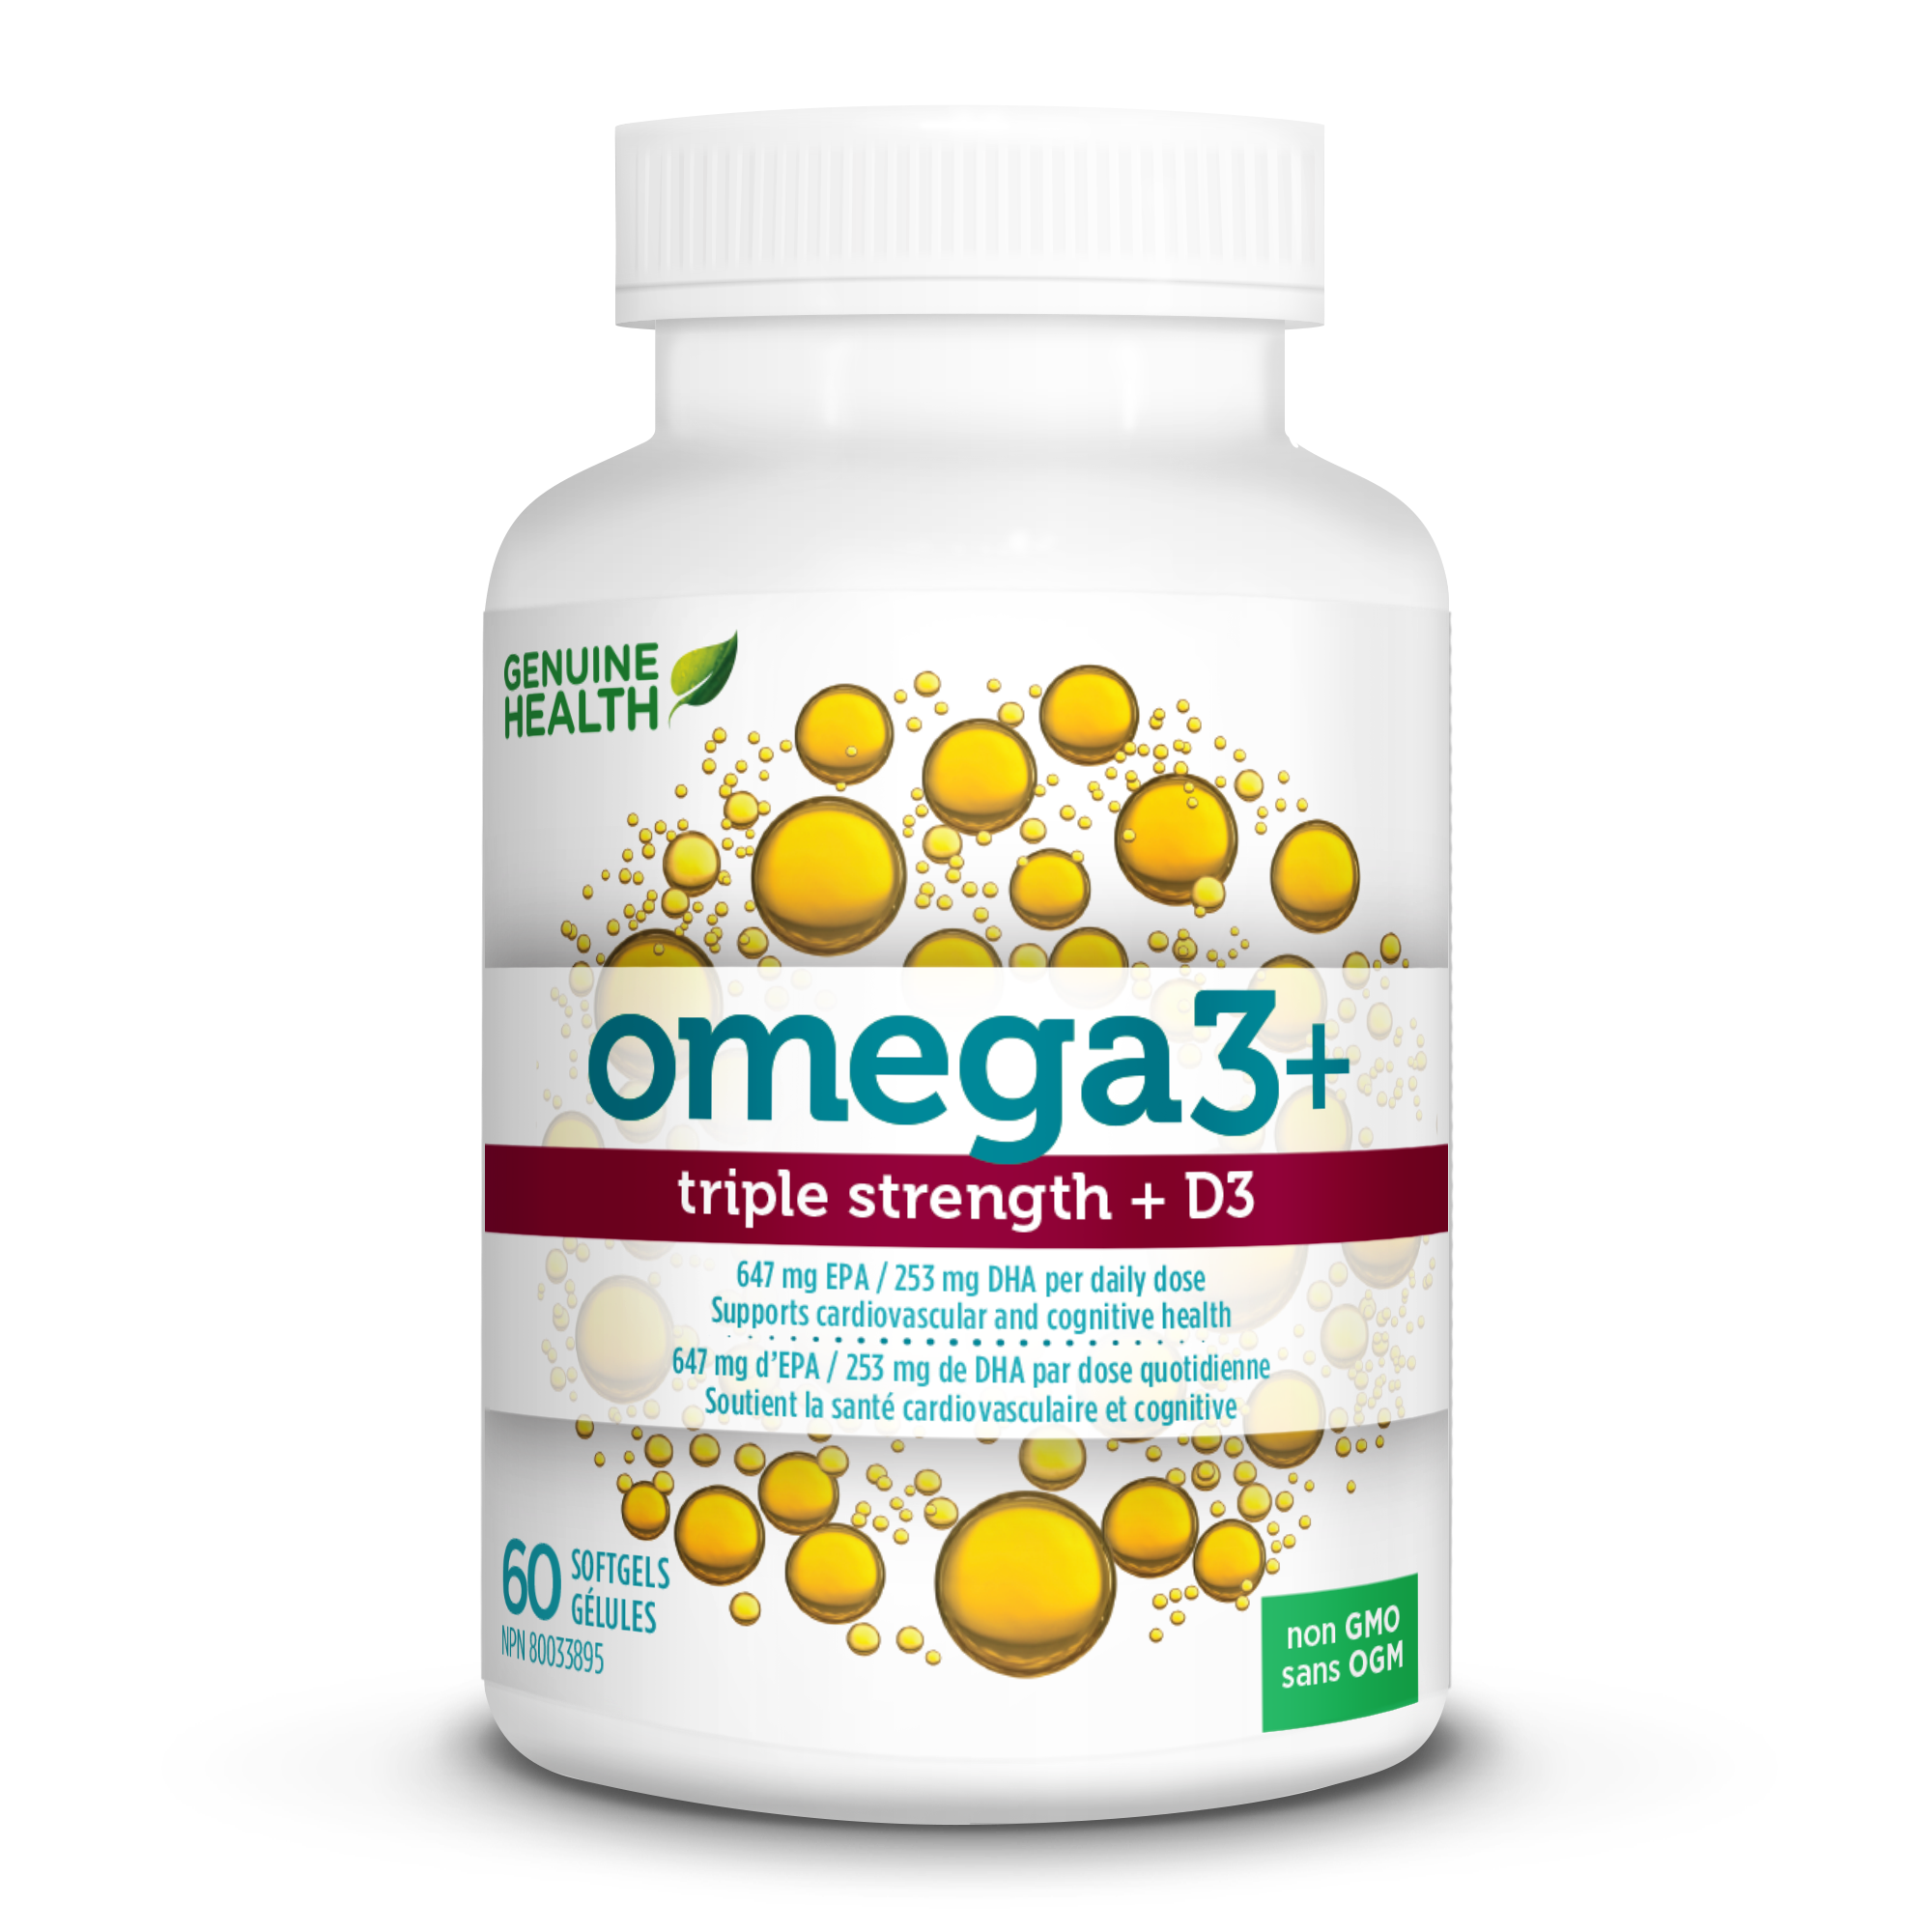 Genuine Health Omega3+ Triple Strength + D3 60 Softgels